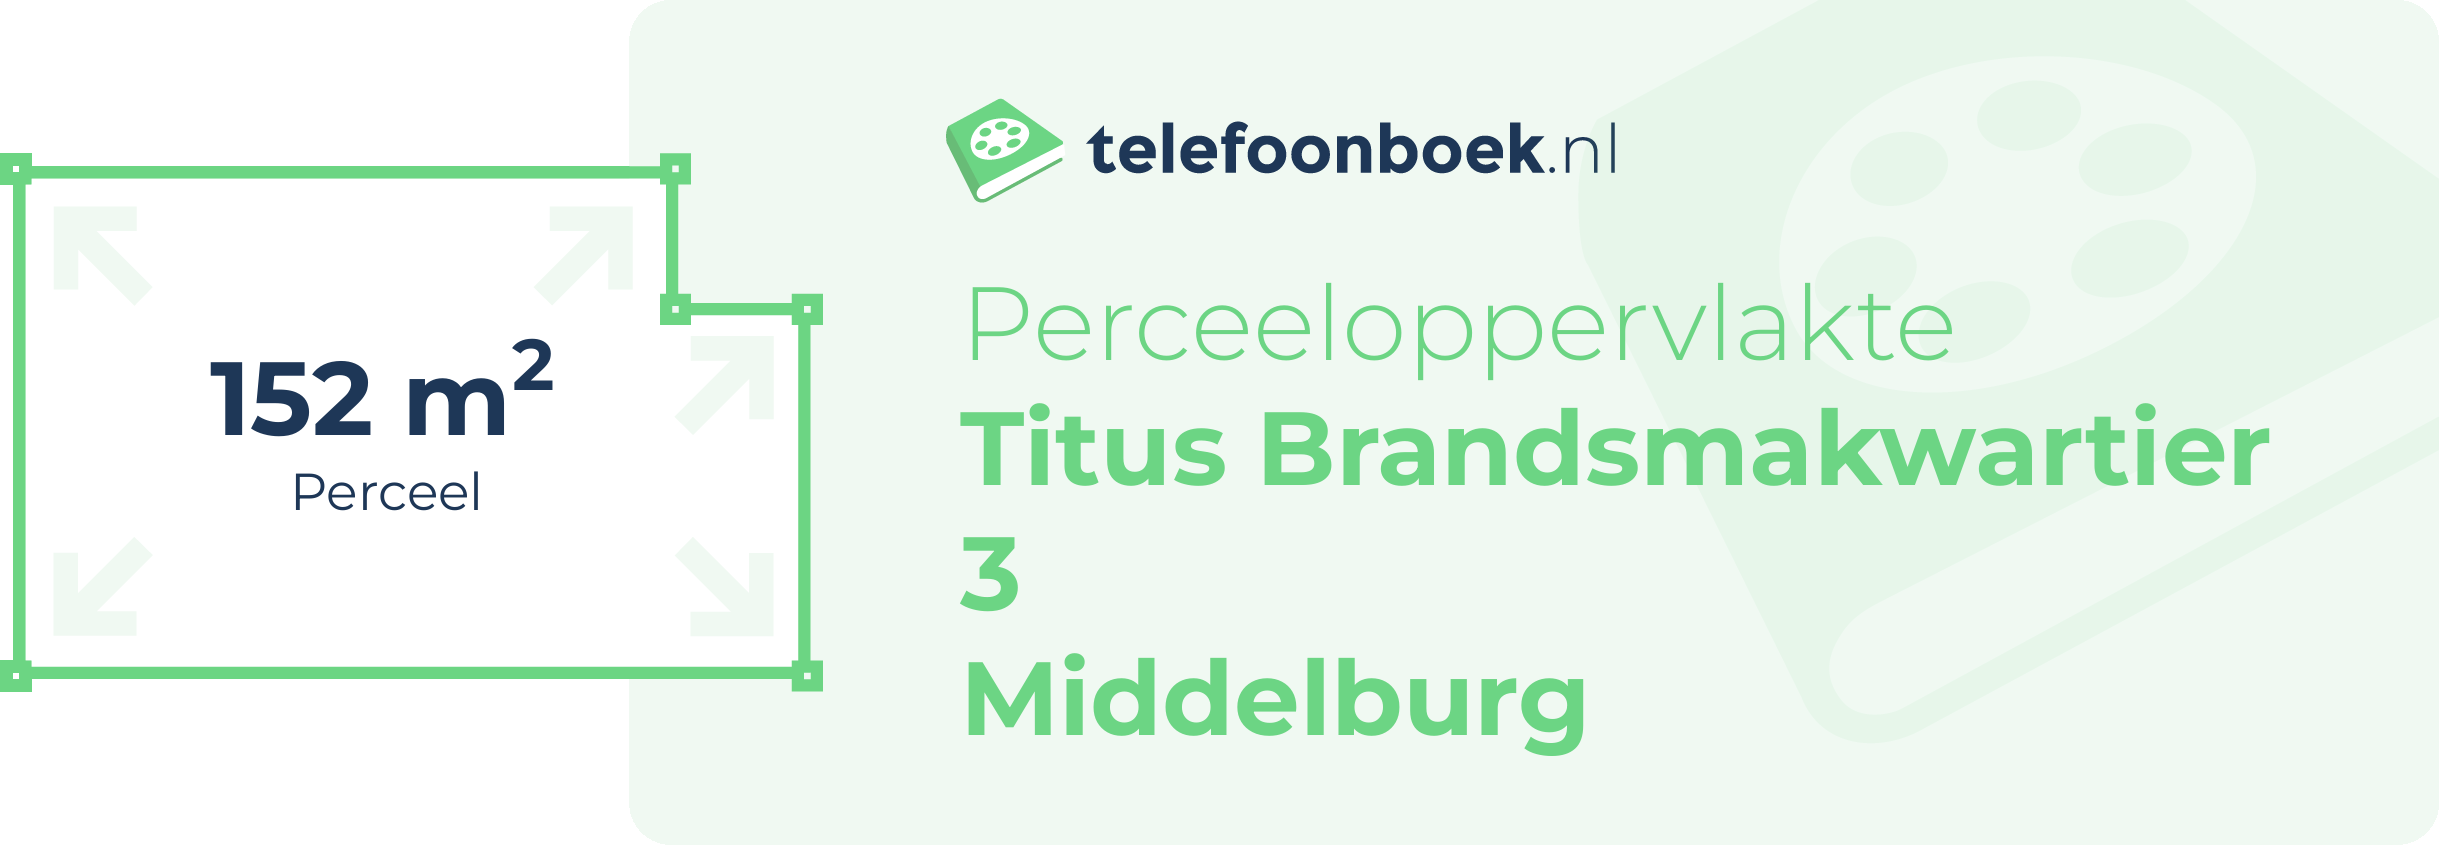 Perceeloppervlakte Titus Brandsmakwartier 3 Middelburg